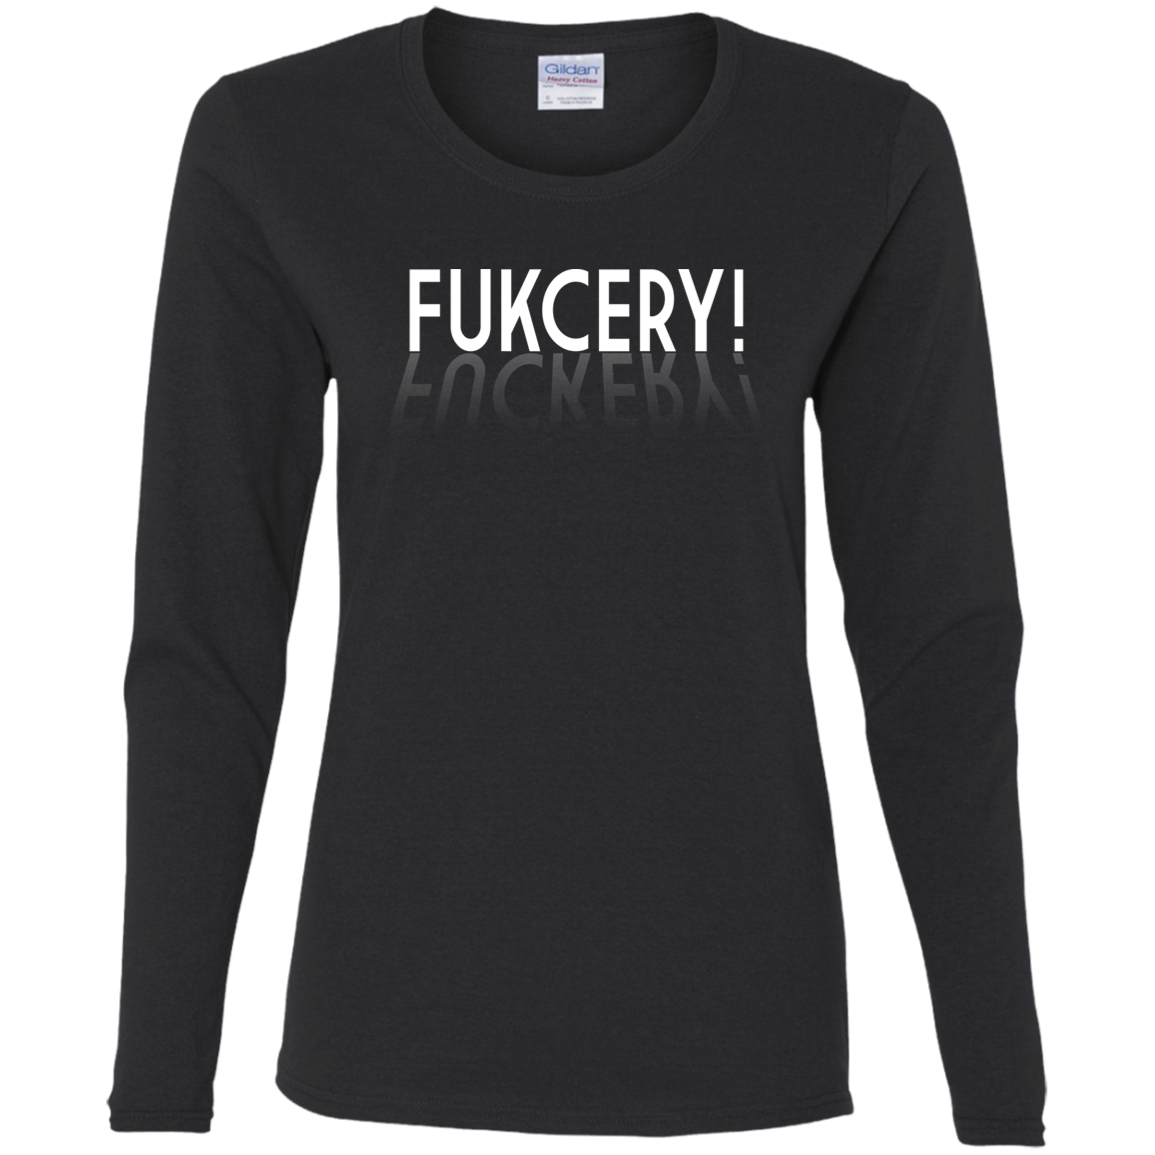 ArtichokeUSA Custom Design. FUKCERY. The New Bullshit. Ladies' Cotton LS T-Shirt